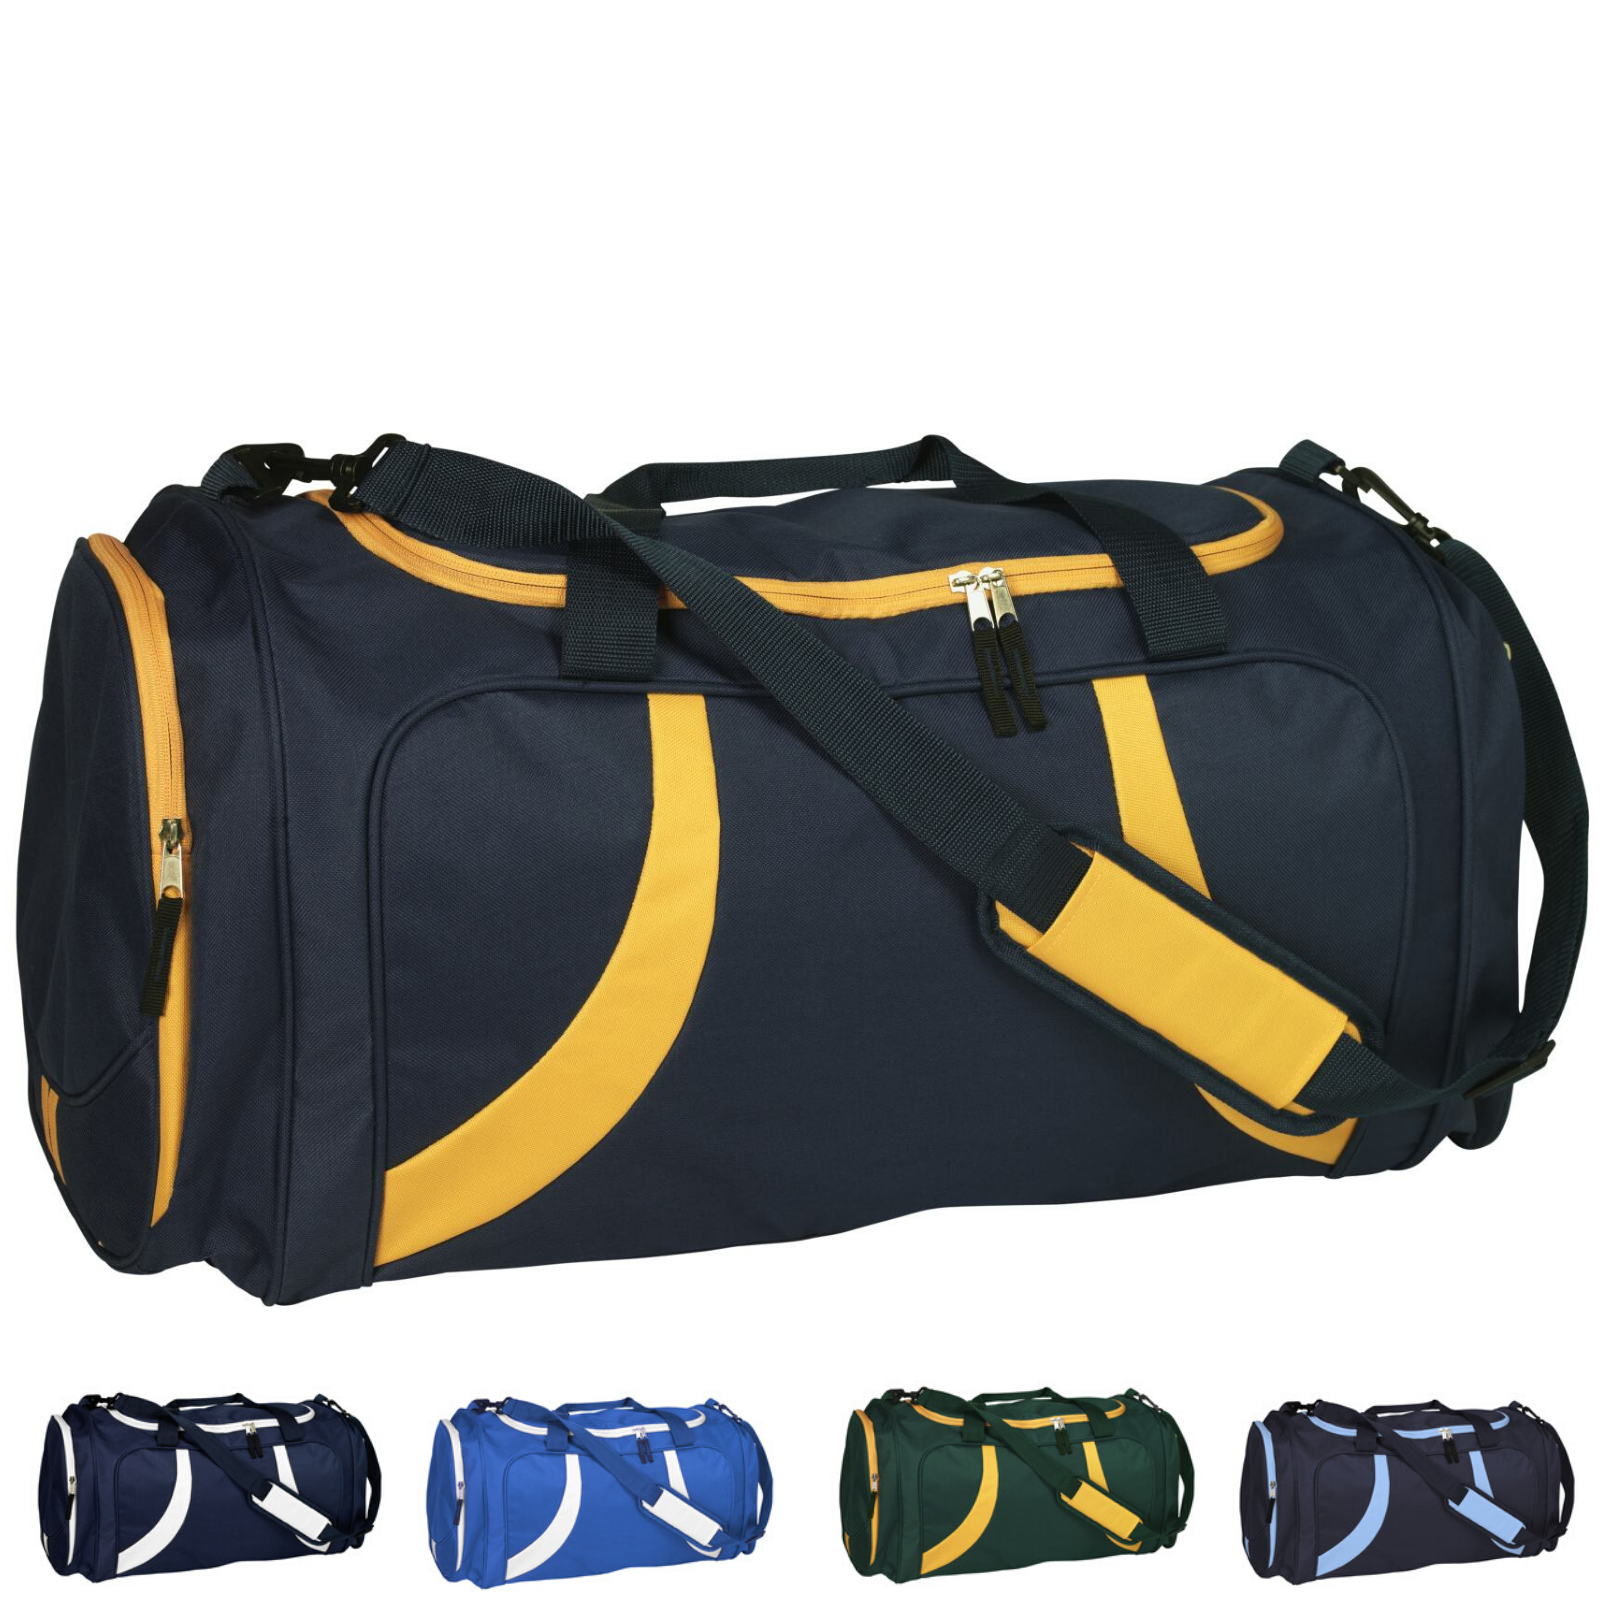 SPORTS BAG LARGE w Shoulder Strap Gym Duffle Travel Bags Water Resistant - Boutique Retailer